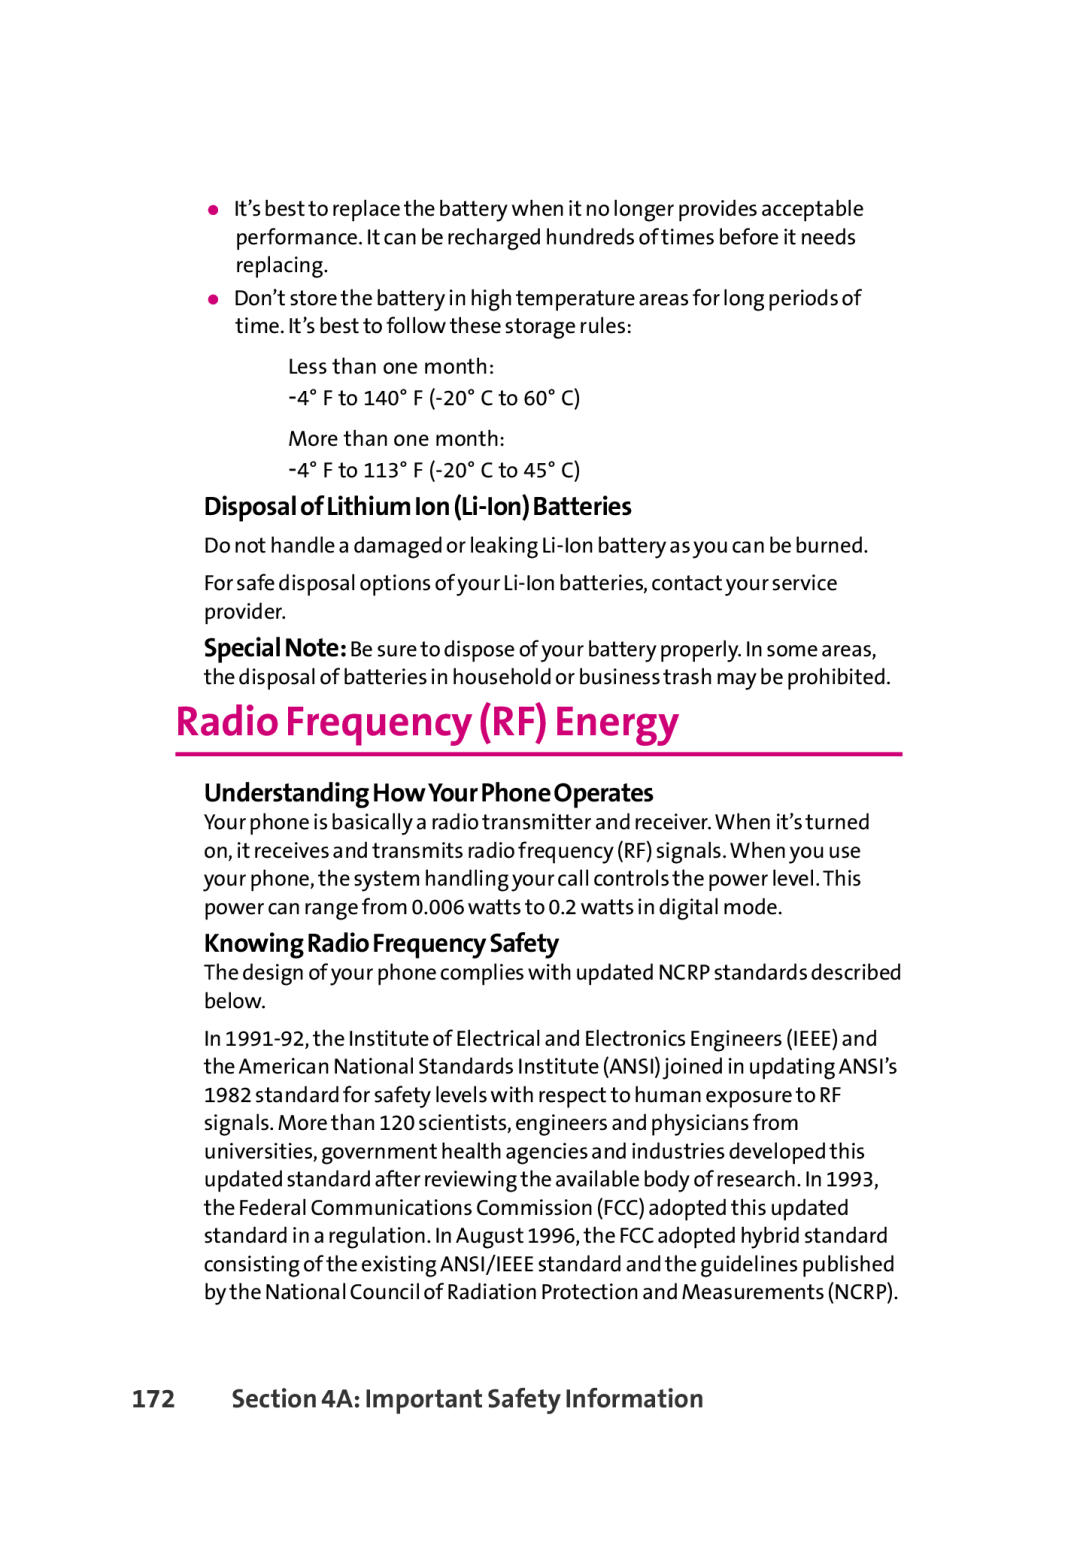 LG Electronics 350 manual Radio Frequency RF Energy, DisposalofLithiumIonLi-IonBatteries, UnderstandingHowYourPhoneOperates 